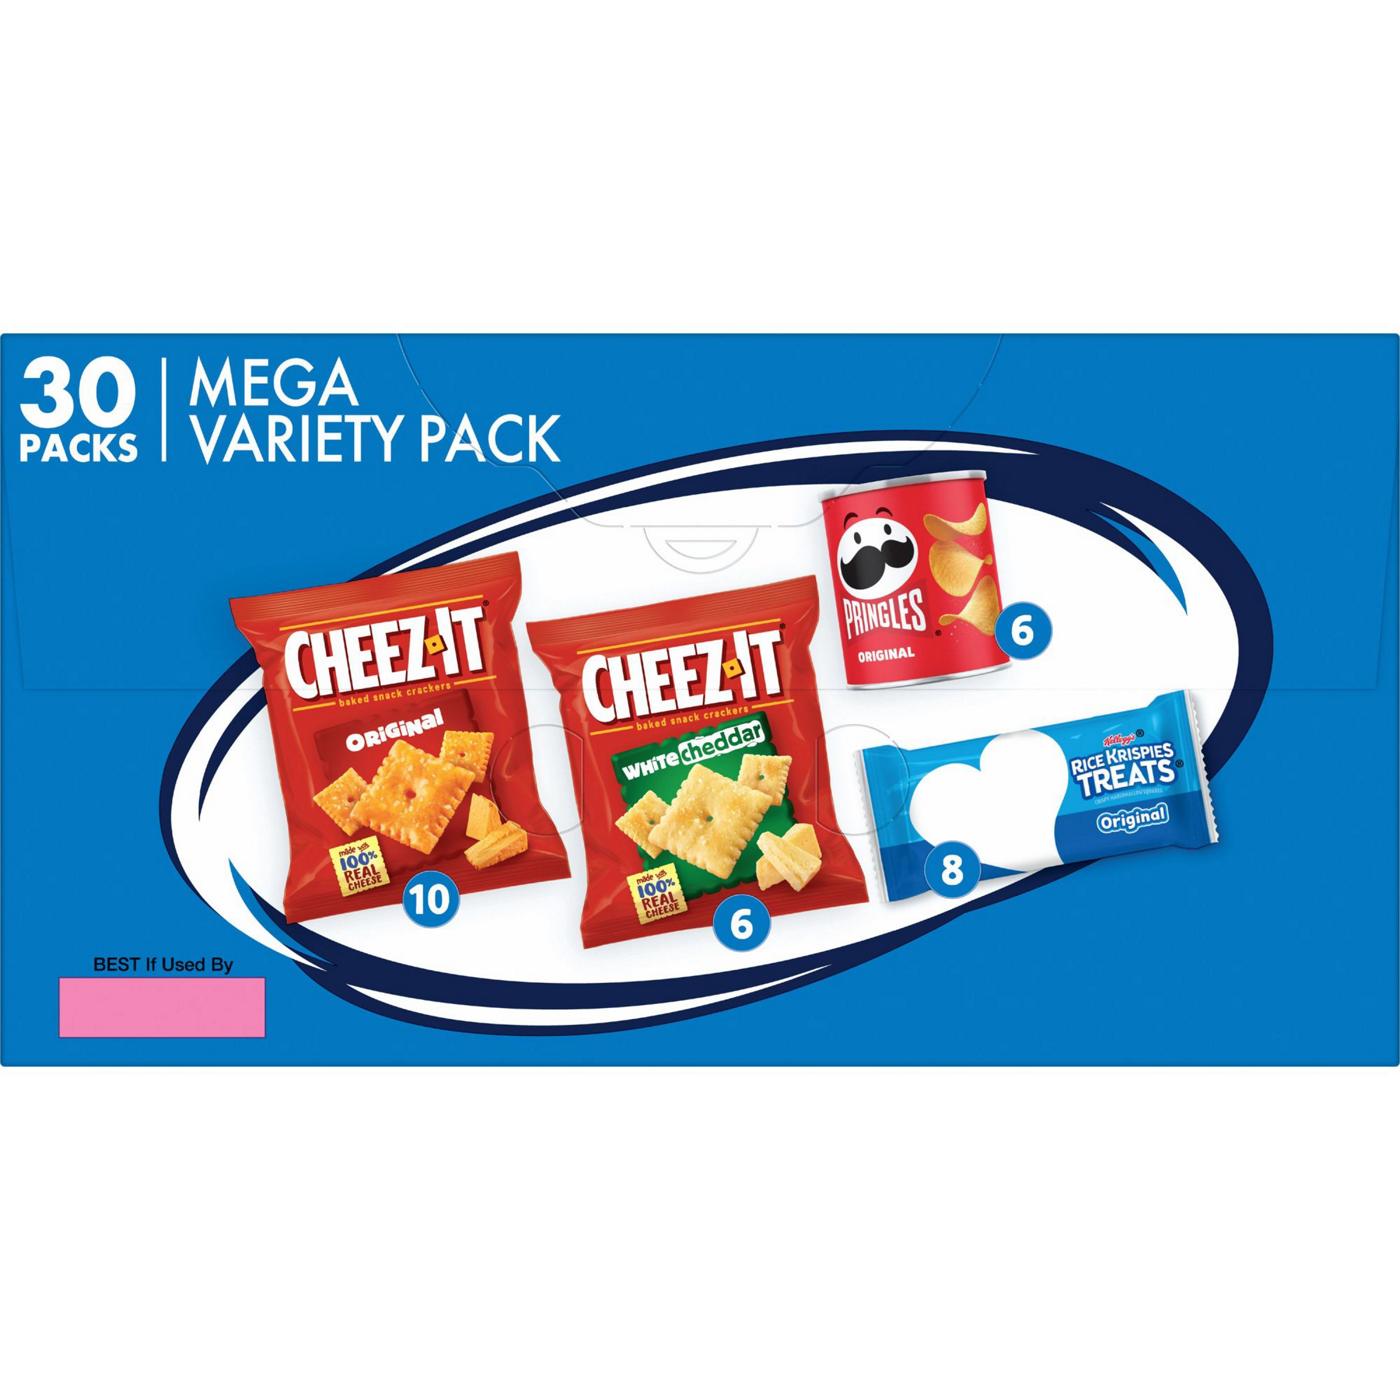 Kellogg's Variety Pack Snacks; image 3 of 3